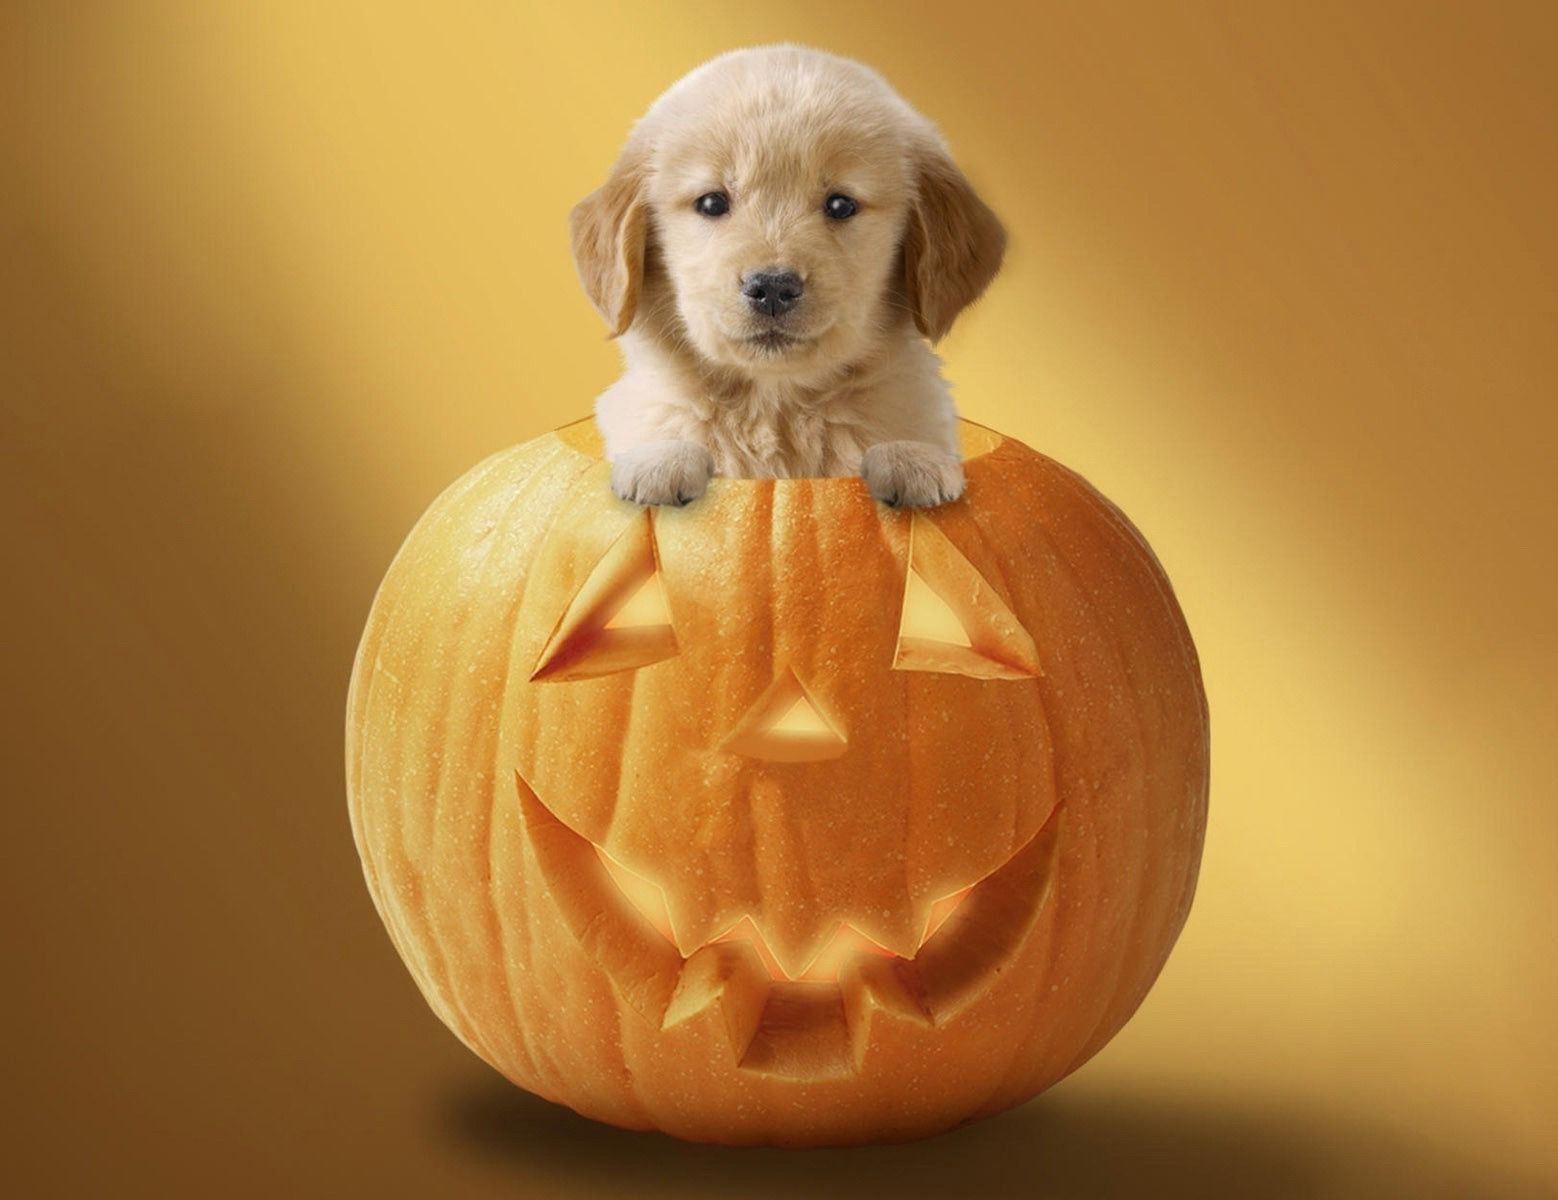 10100 Dog Halloween Stock Photos Pictures  RoyaltyFree Images  iStock   Dog halloween costume Halloween Halloween cat